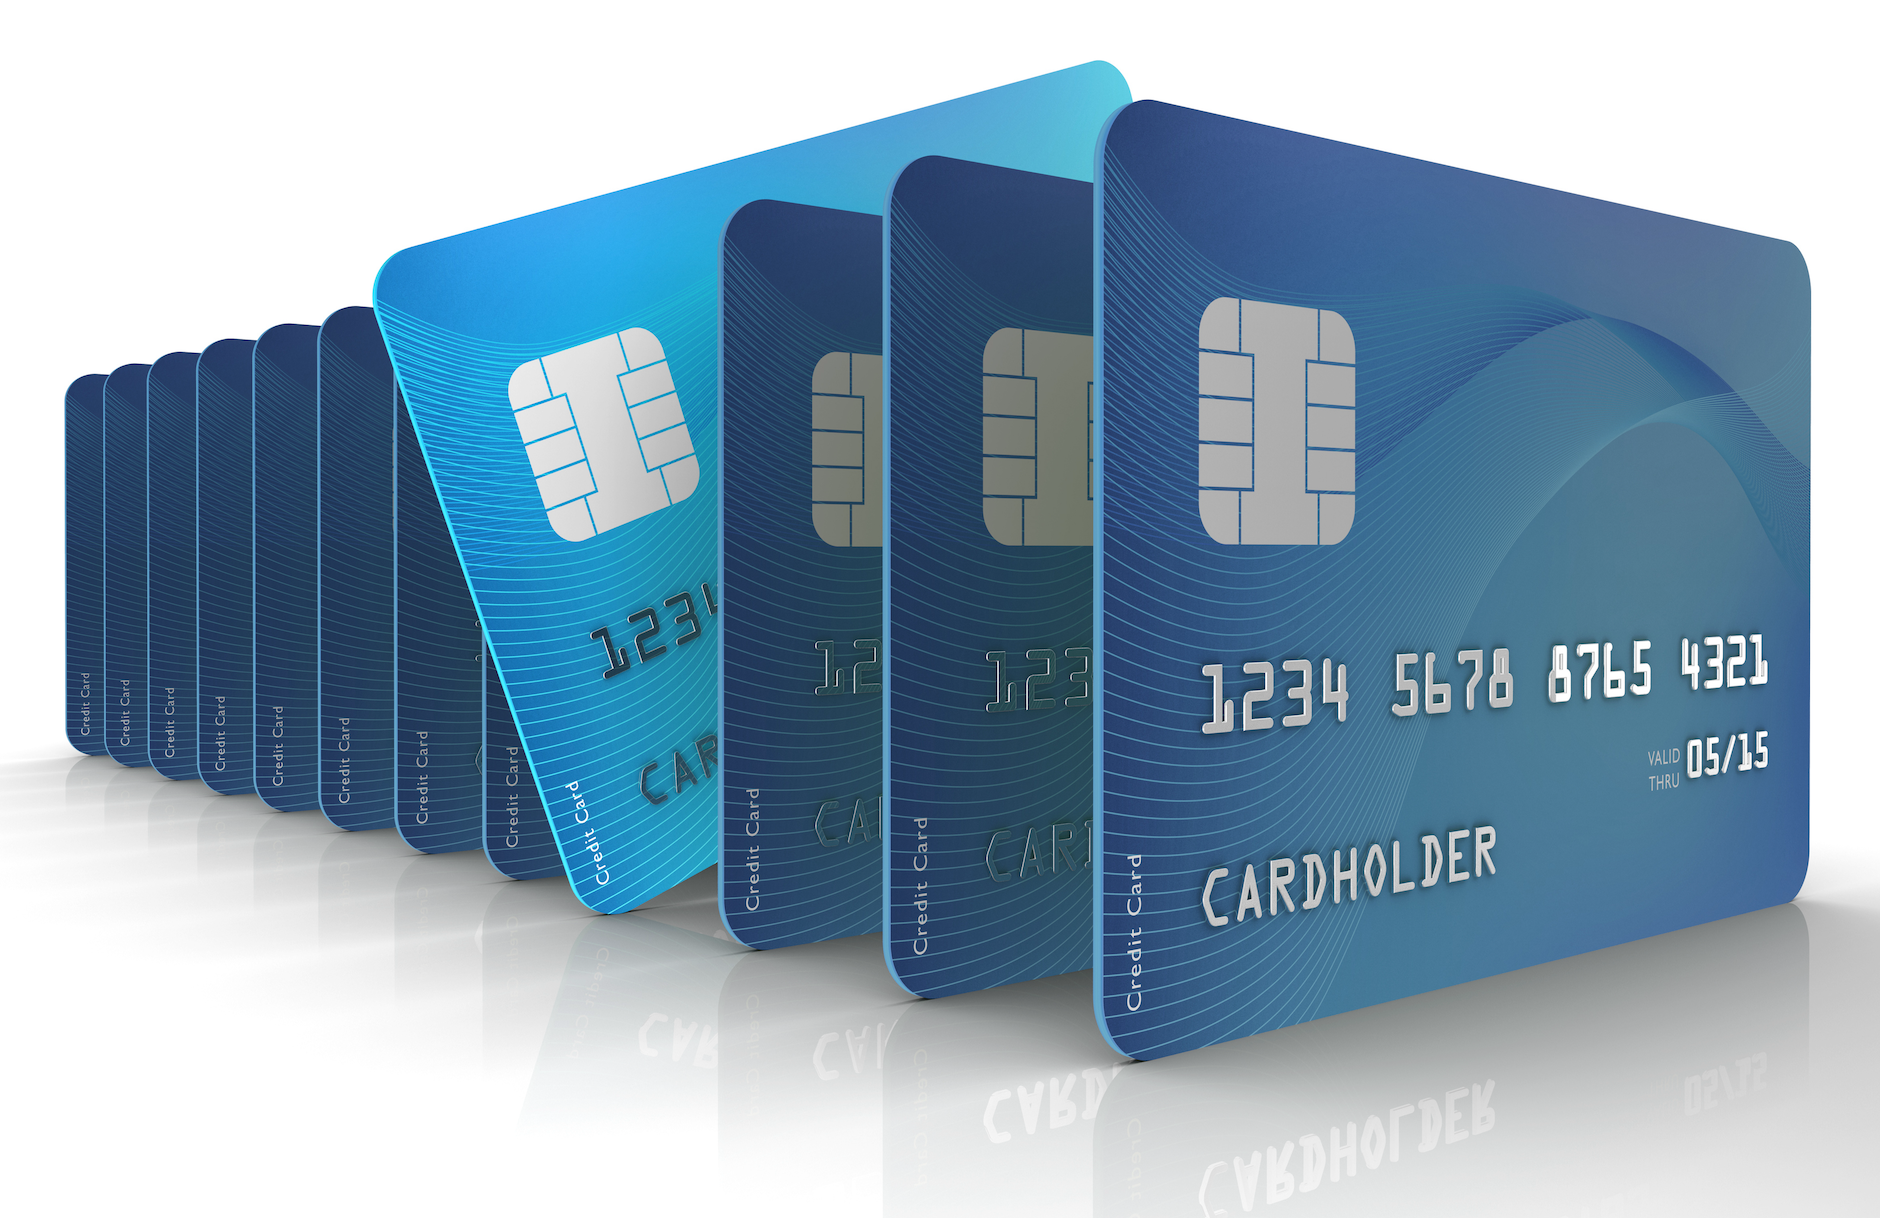 White-Label Debit Card Programs